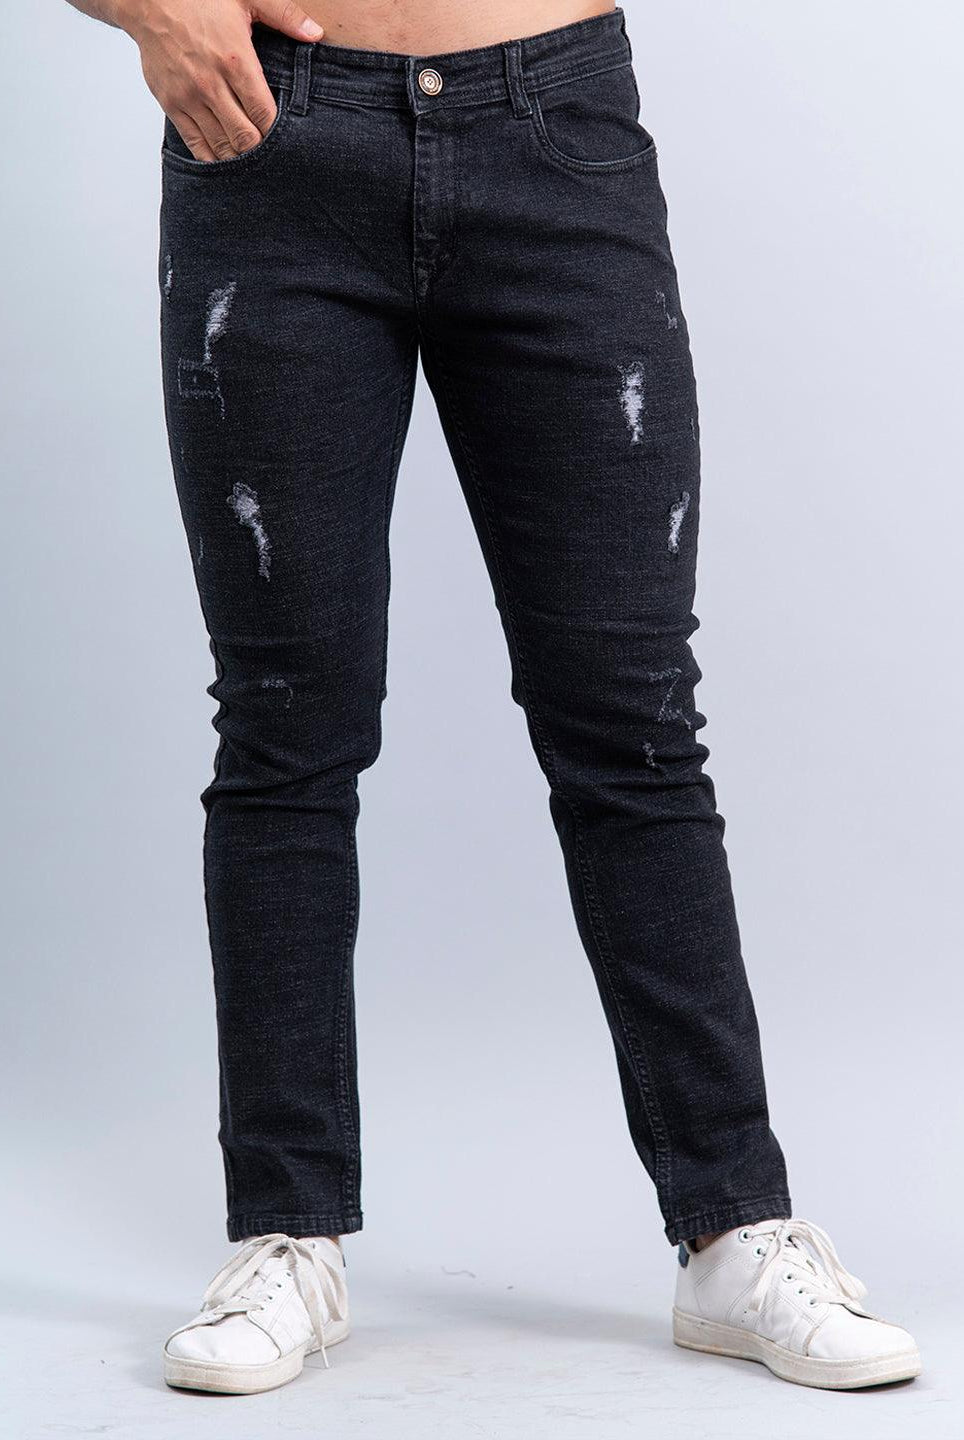 black denim ankle length stretchable mens jeans